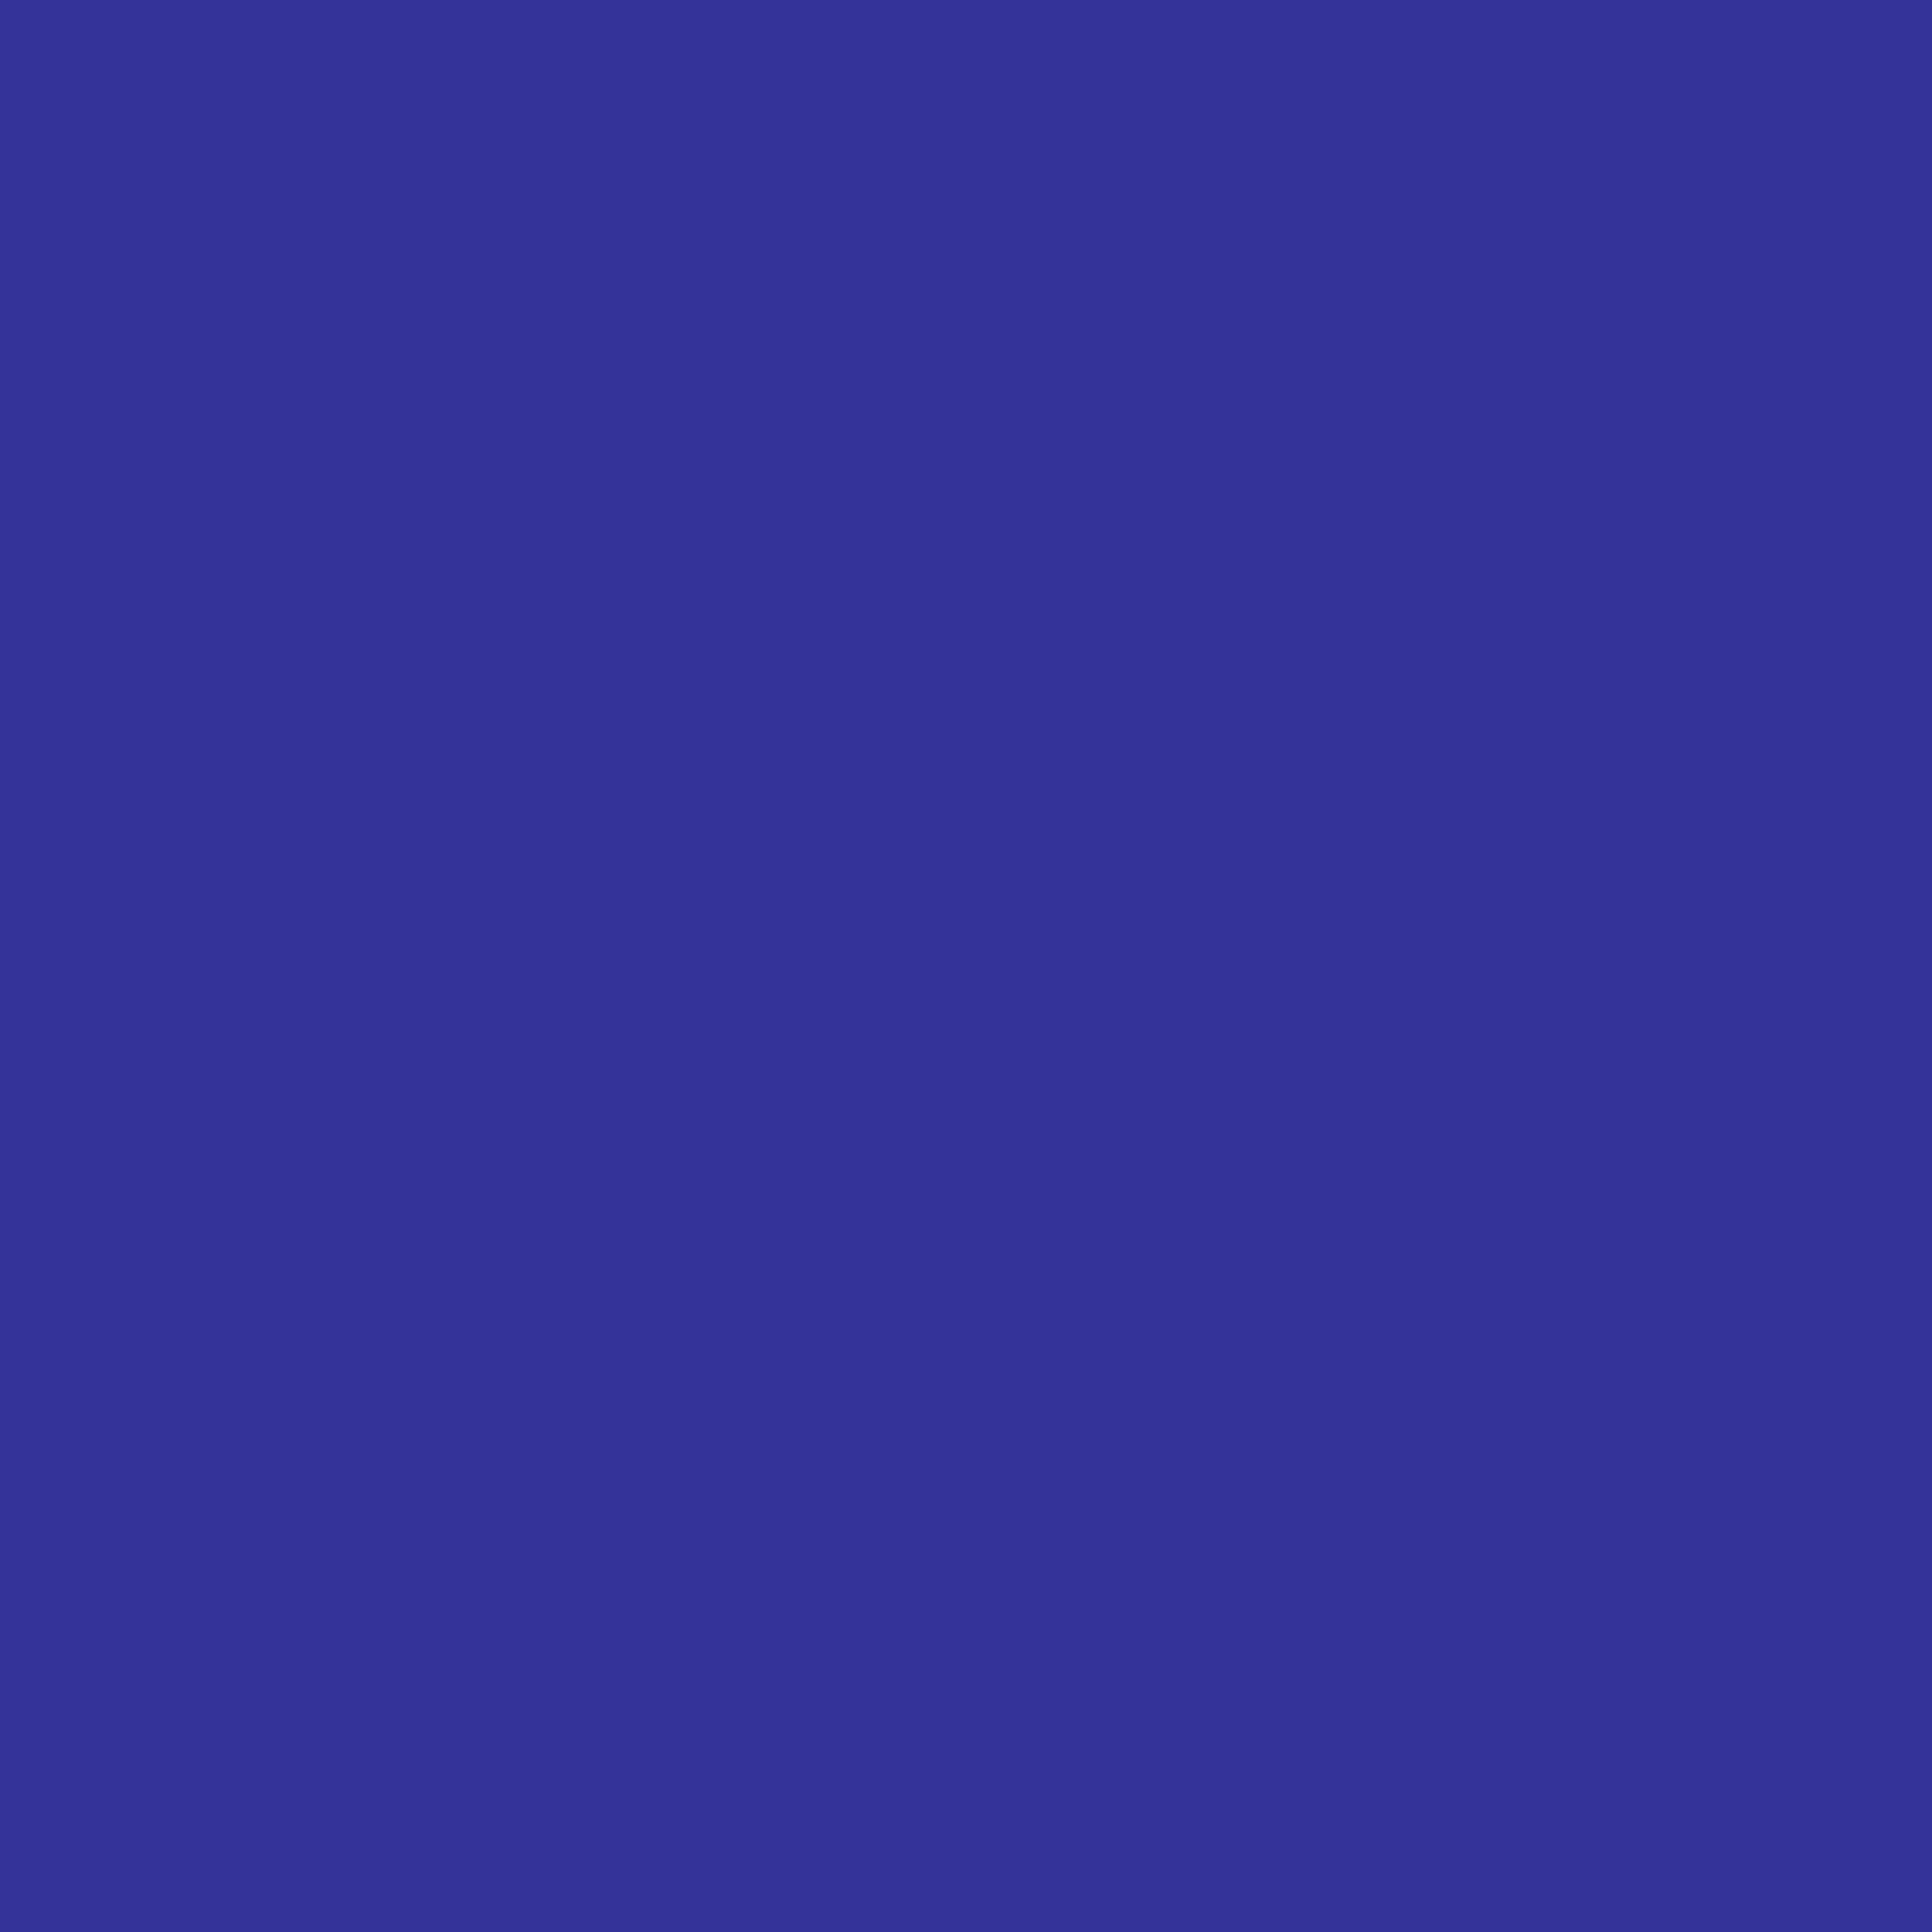 2732x2732 Blue Pigment Solid Color Background